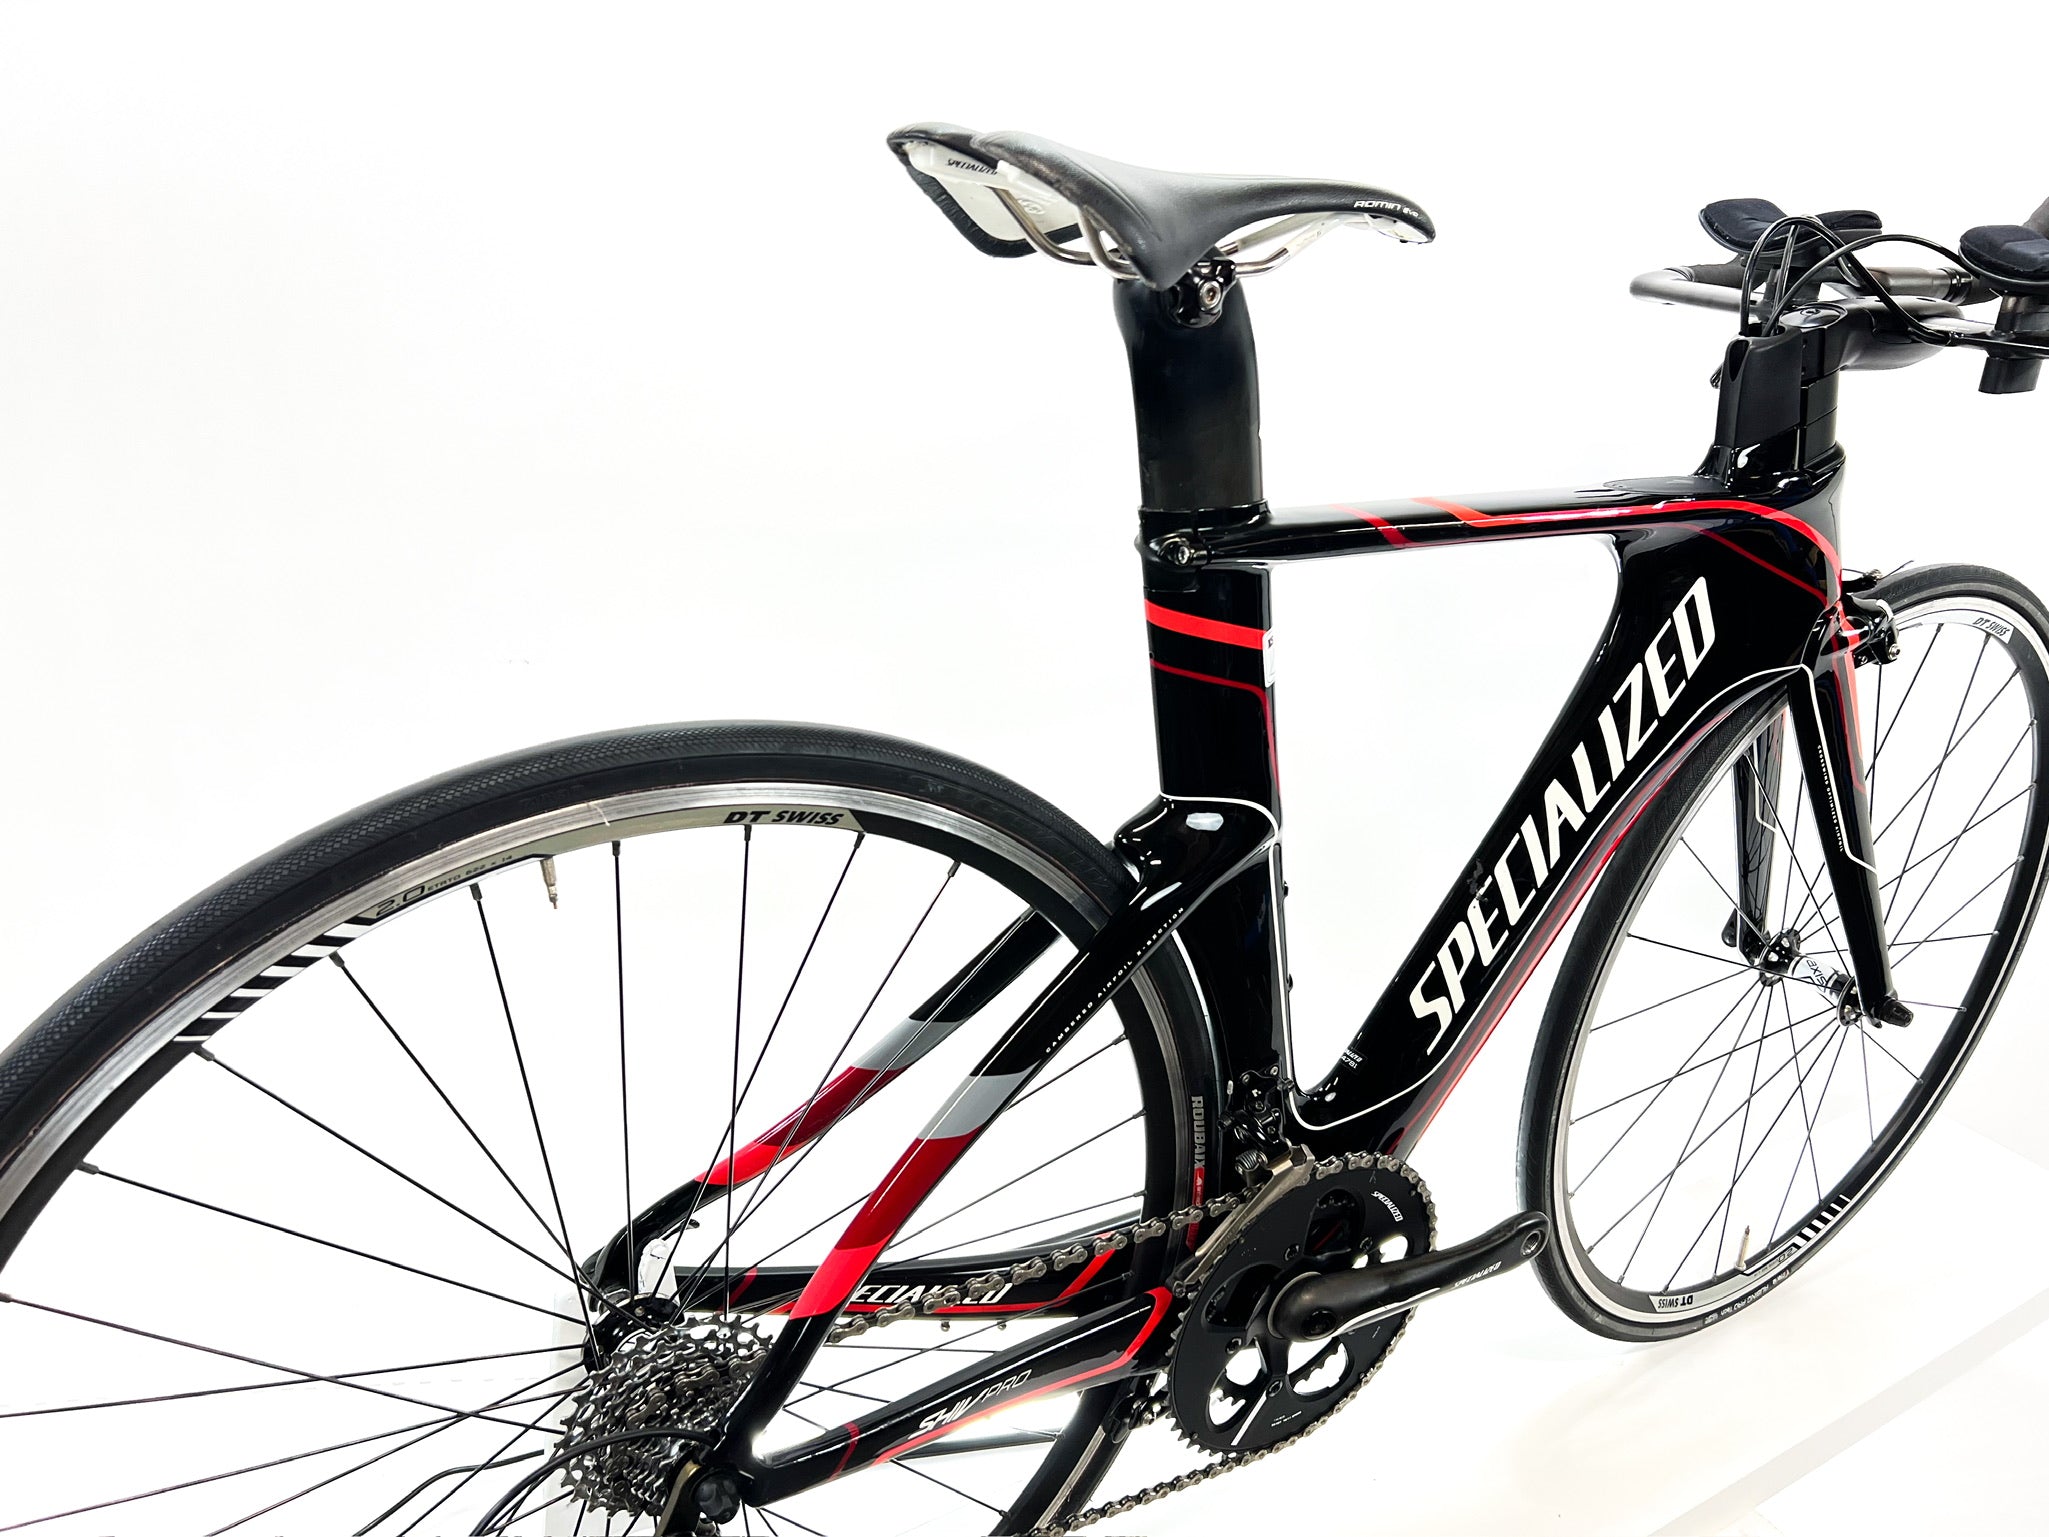 Specialized Shiv Pro, Sram Red, Carbon Triathlon Bike, 19 Pounds! XS, MSRP:$5,500